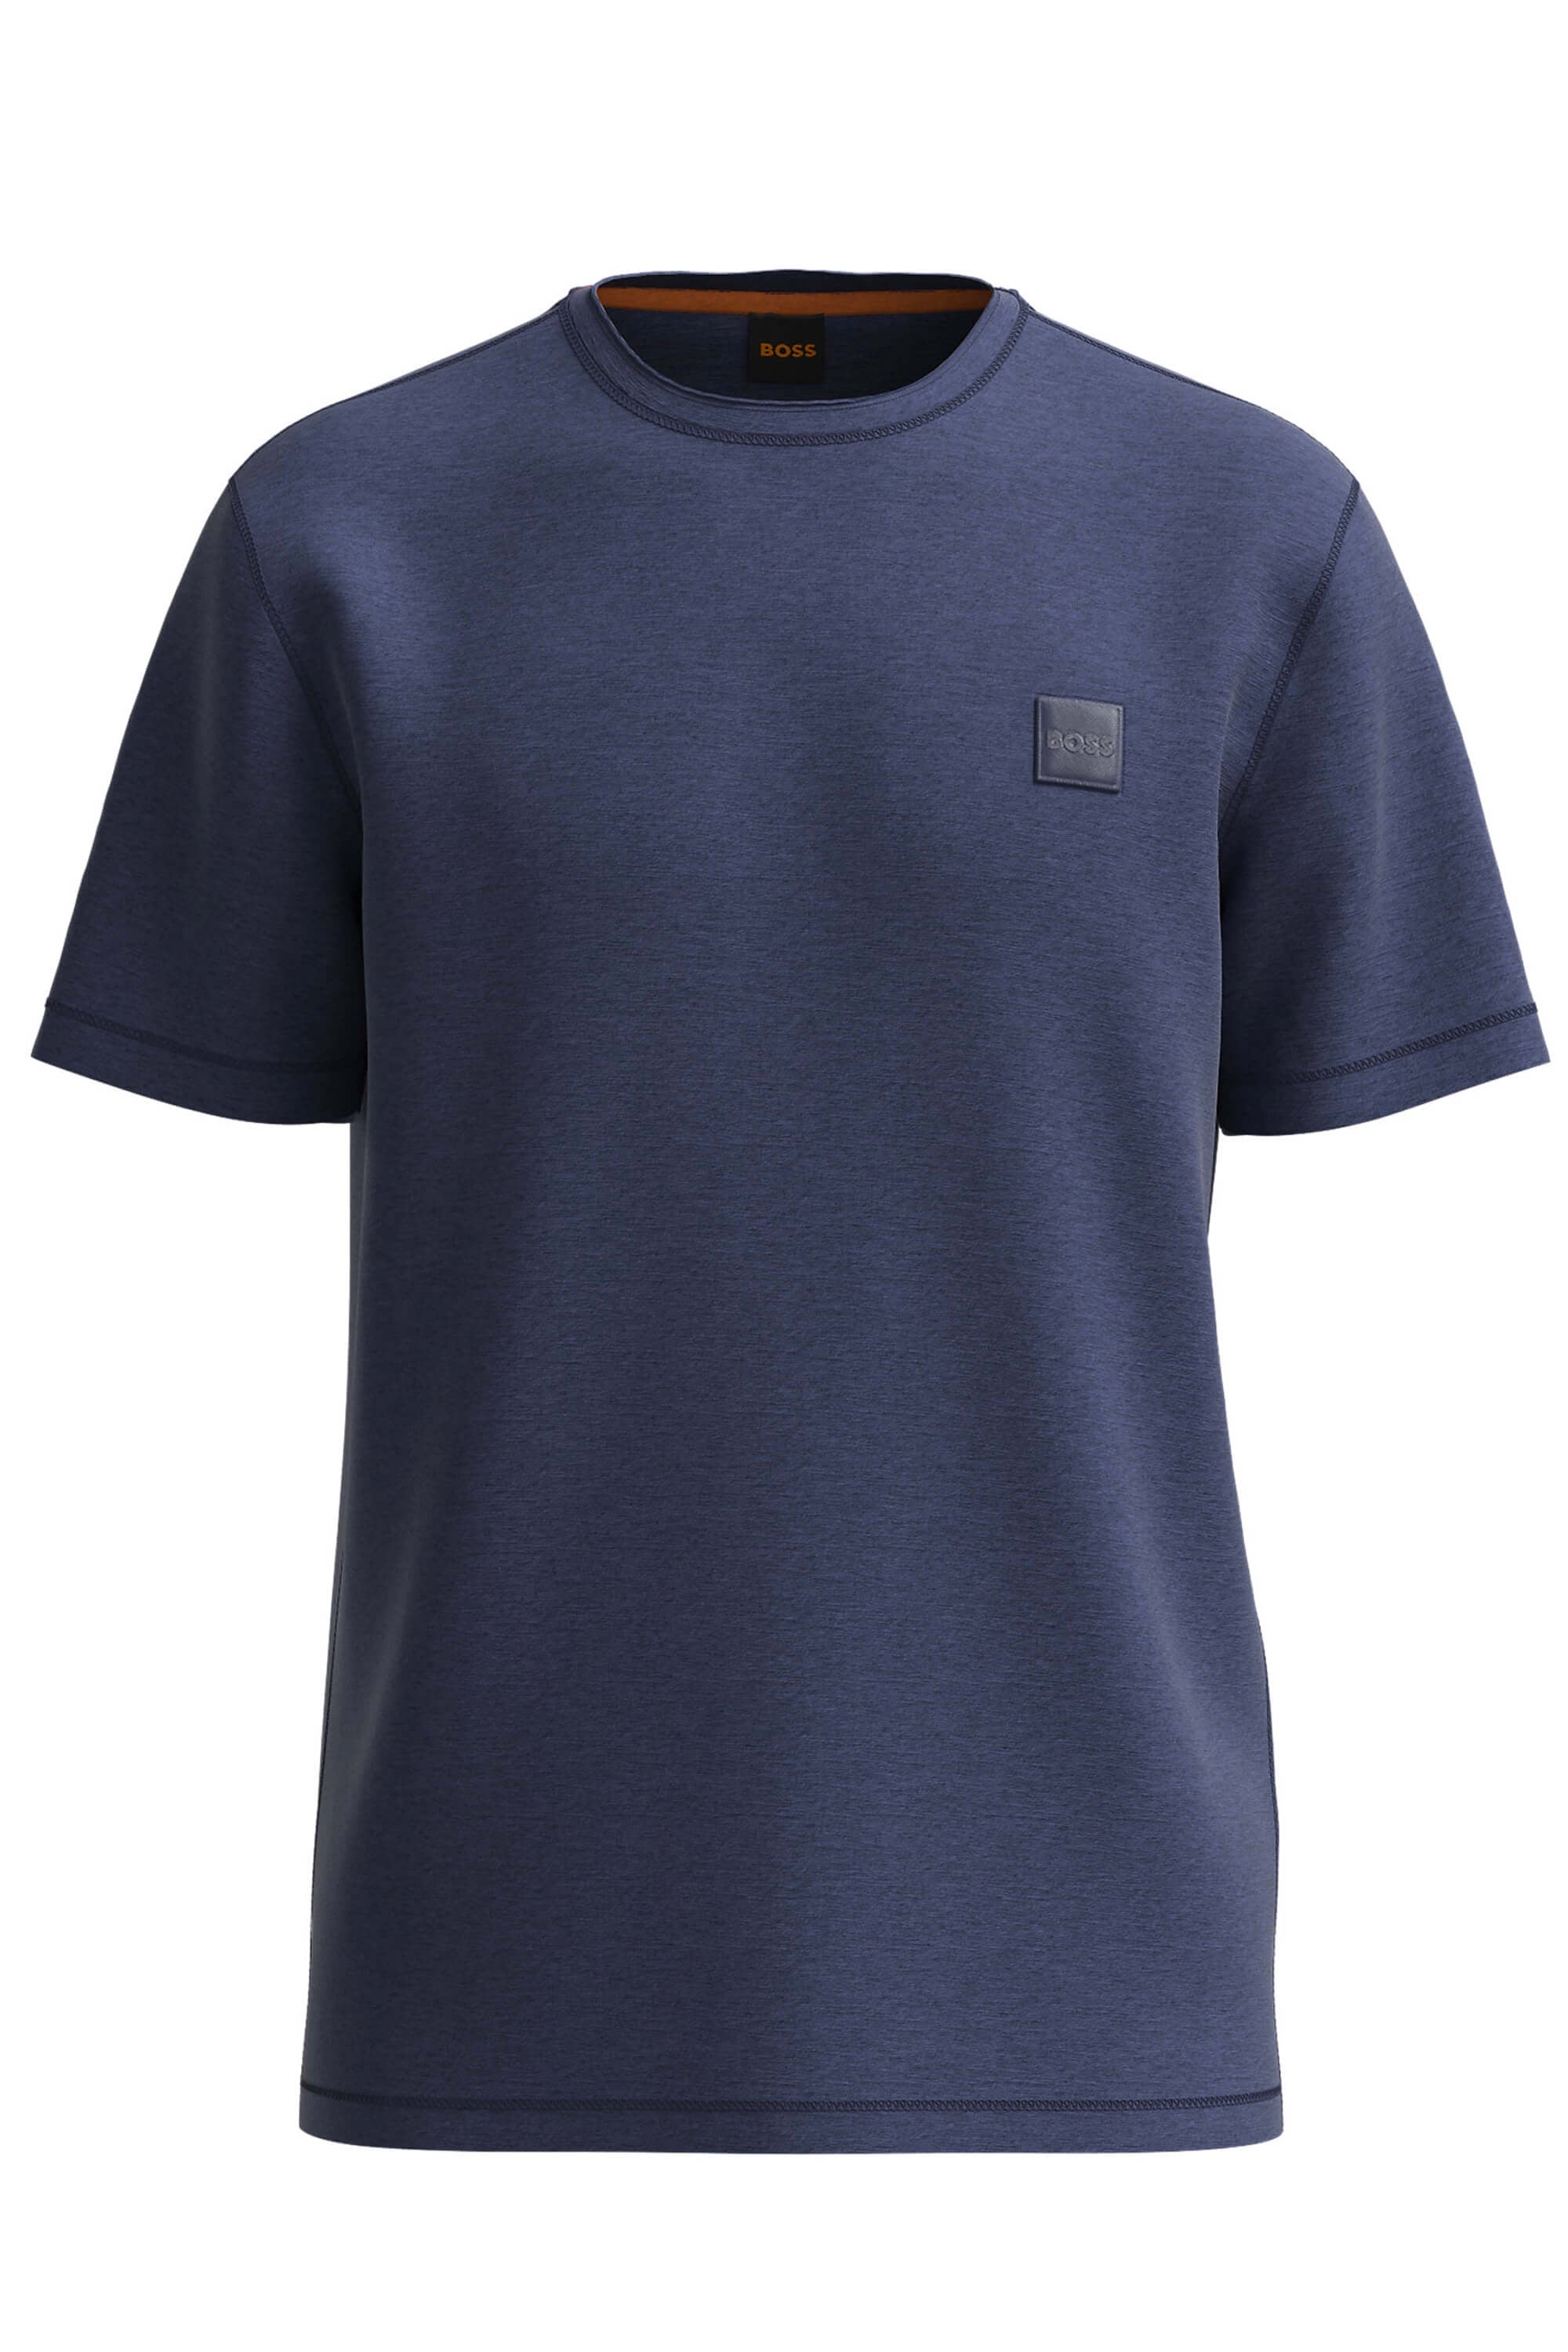 Hugo Boss Tegood T-Shirt Navy